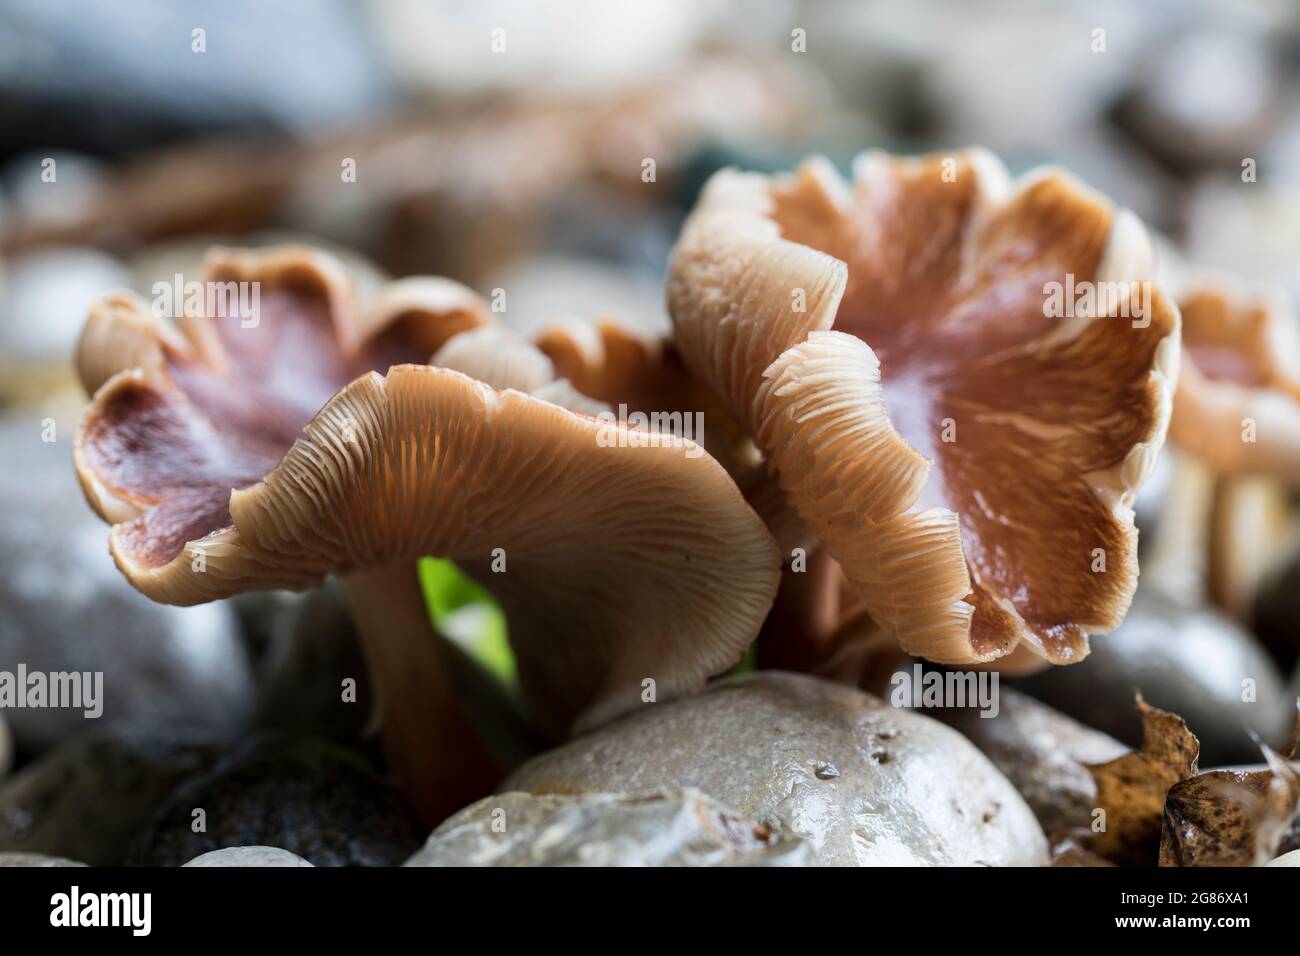 Close up wavy mushroom caps showing light orange gills. Stock Photo